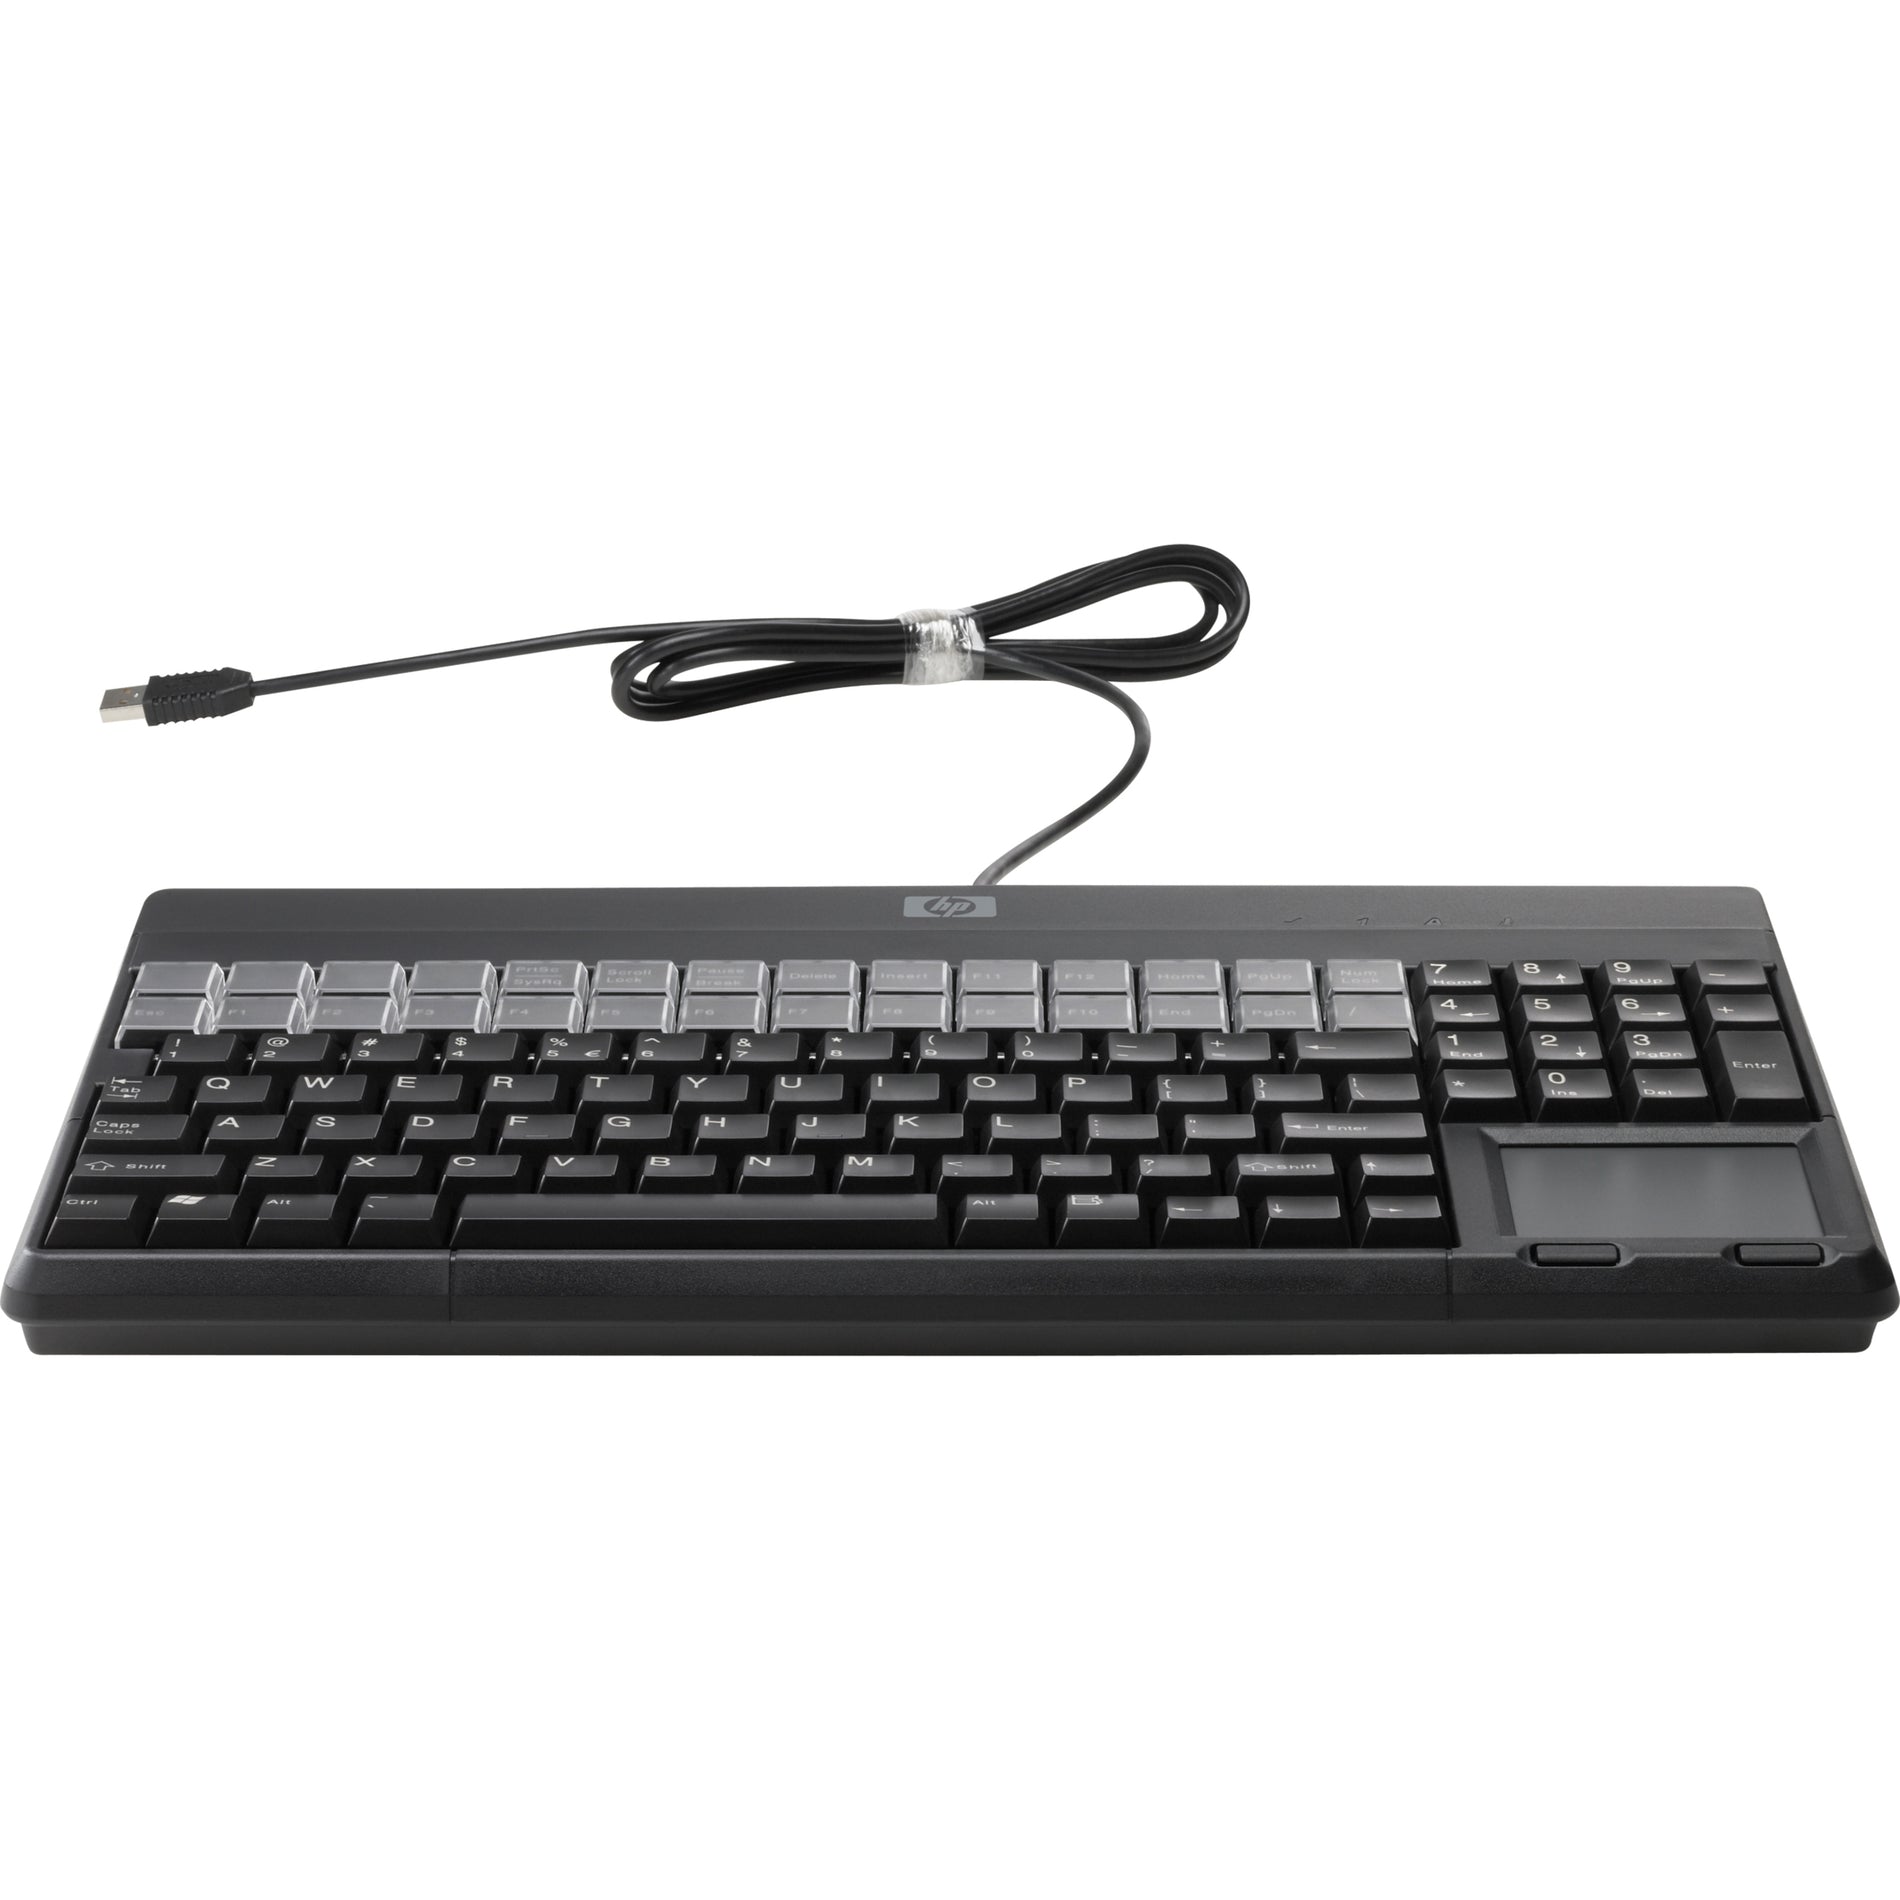 HP POS Keyboard, USB, QWERTY, Relegendable Keys, 106 Keys